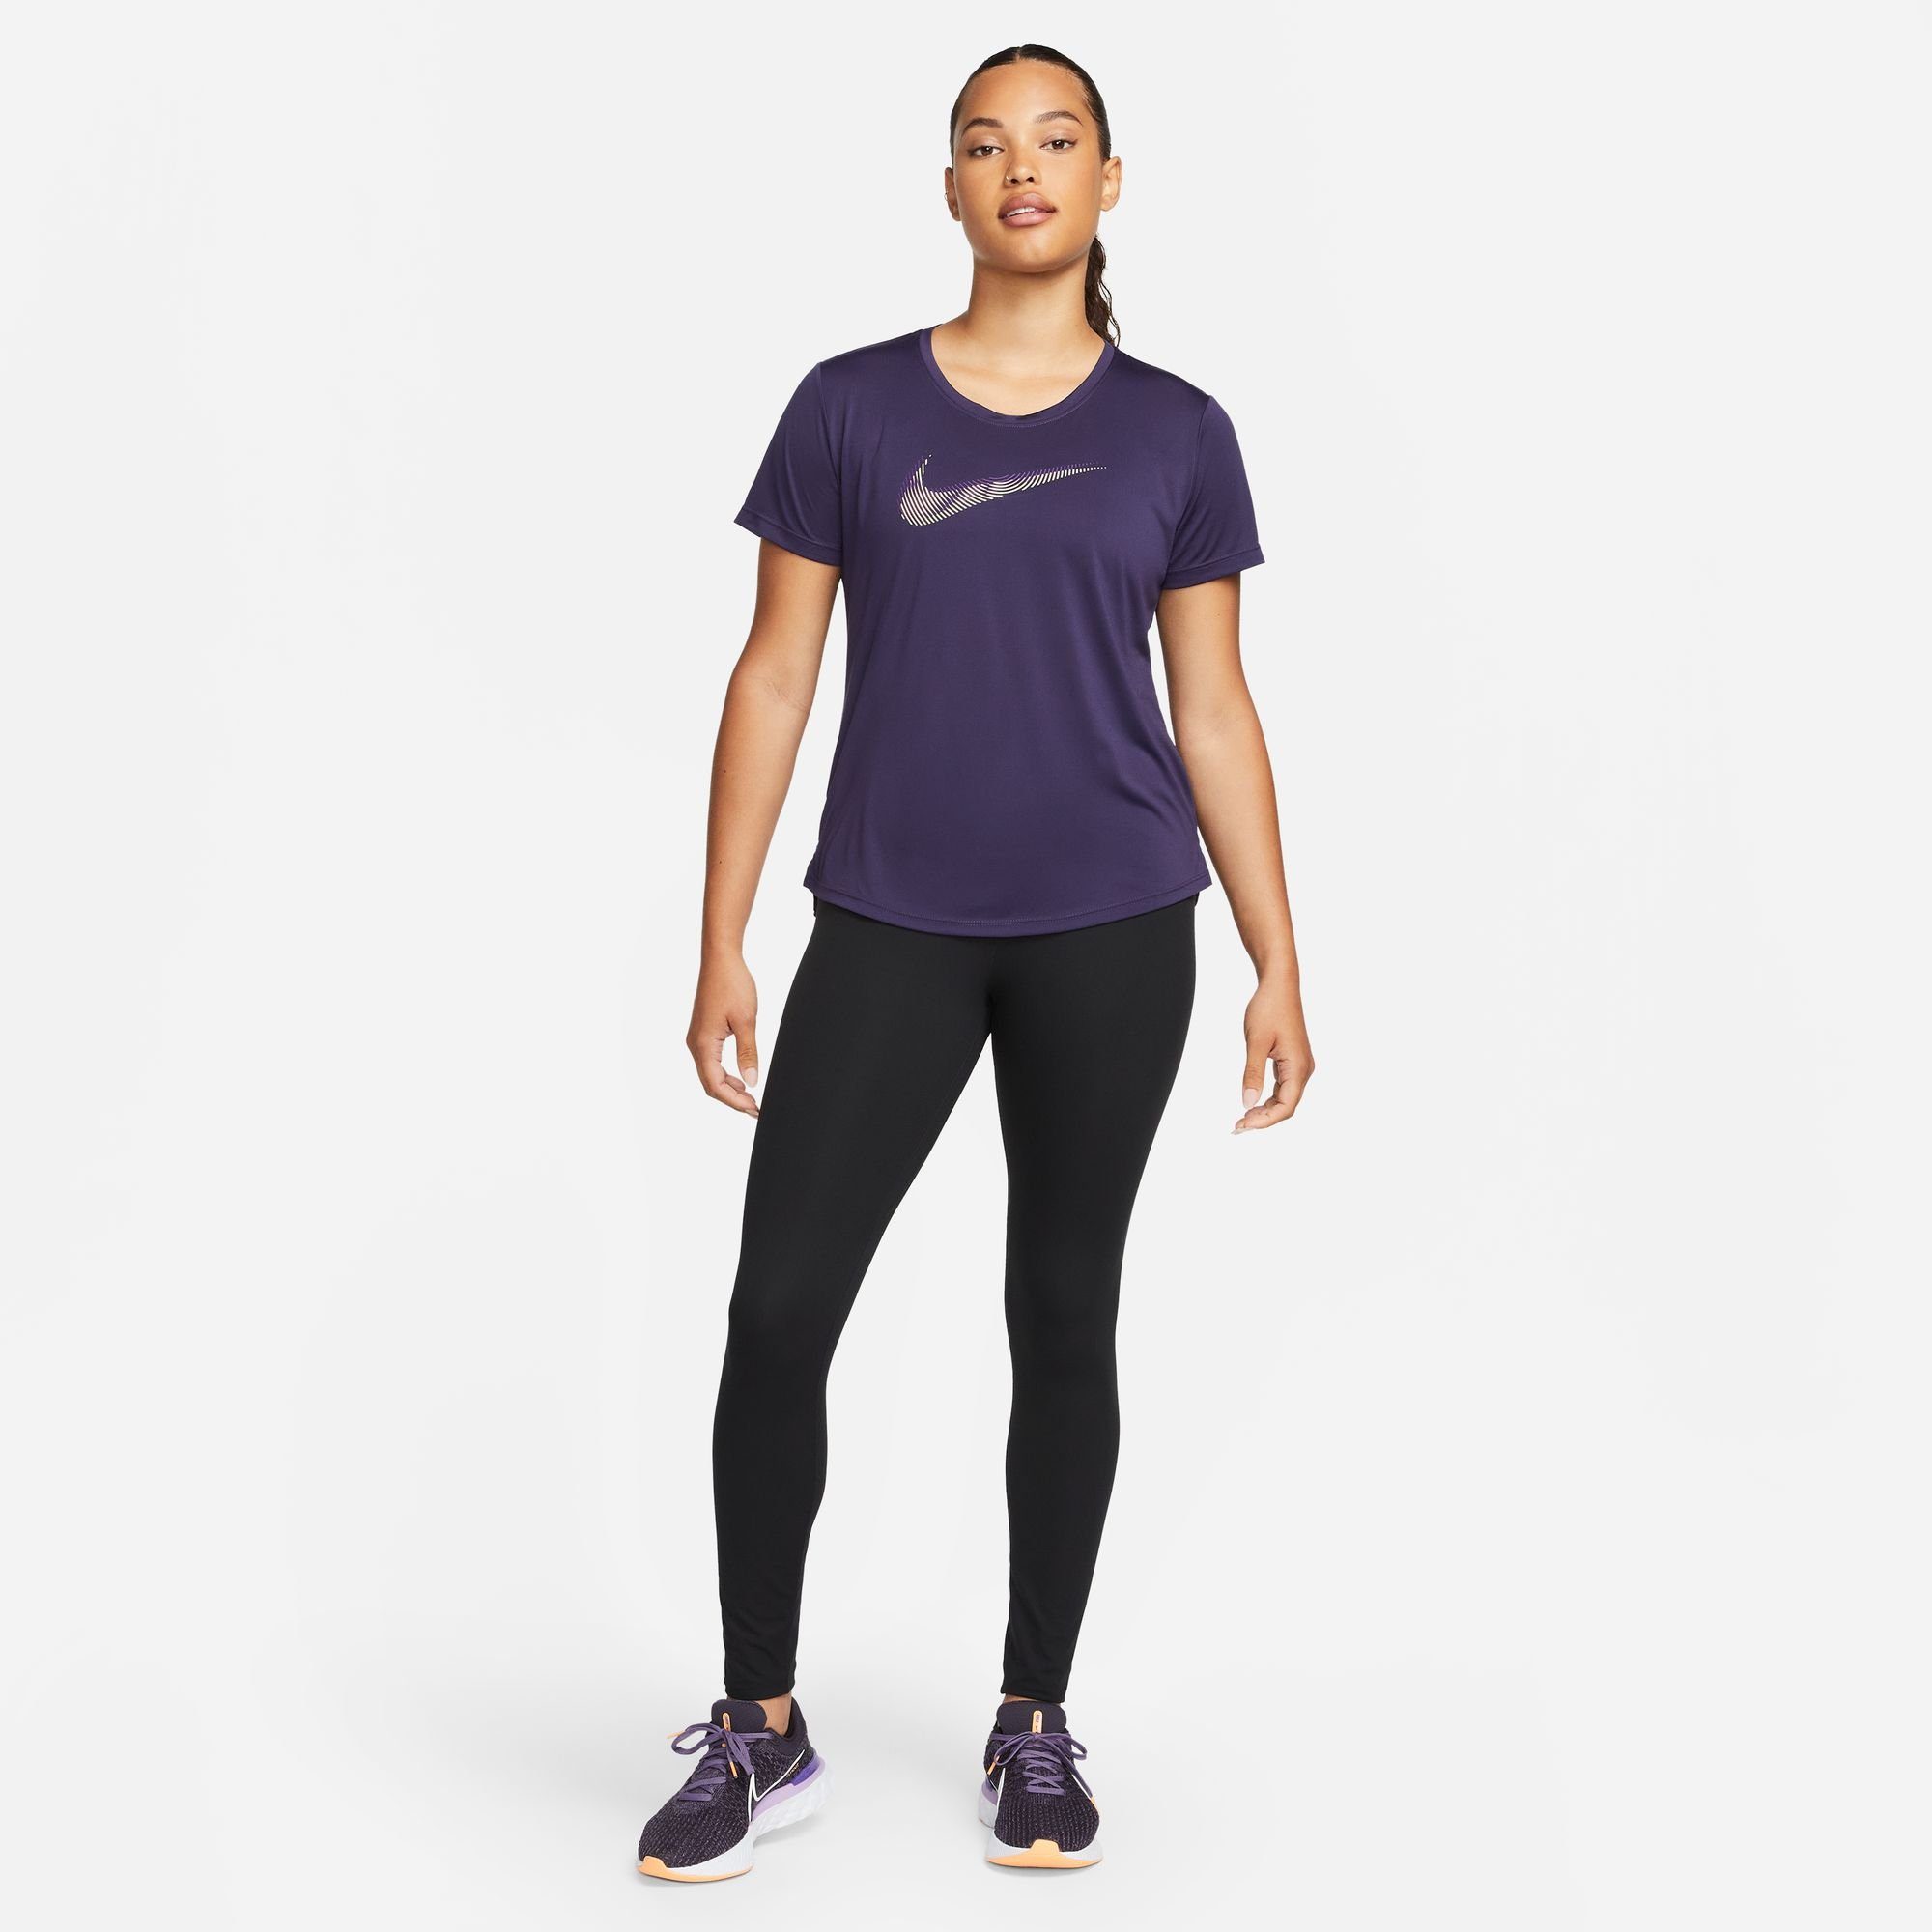 SHORT-SLEEVE PURPLE PURPLE DRI-FIT TOP RUNNING Nike Laufshirt INK/DISCO WOMEN'S SWOOSH